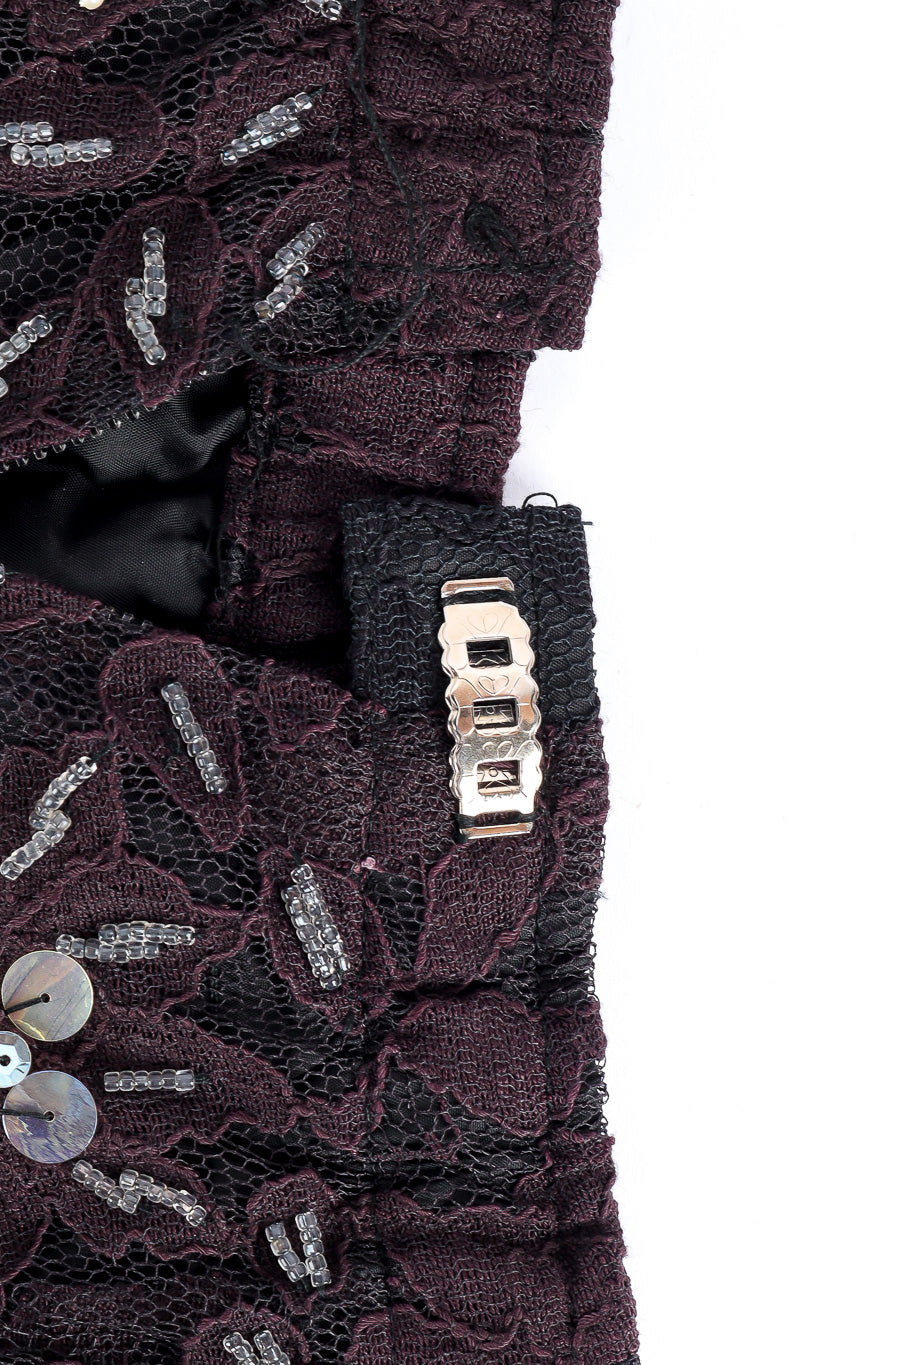 Vintage beaded and sequin lace set clasp closure close-up. @recessla